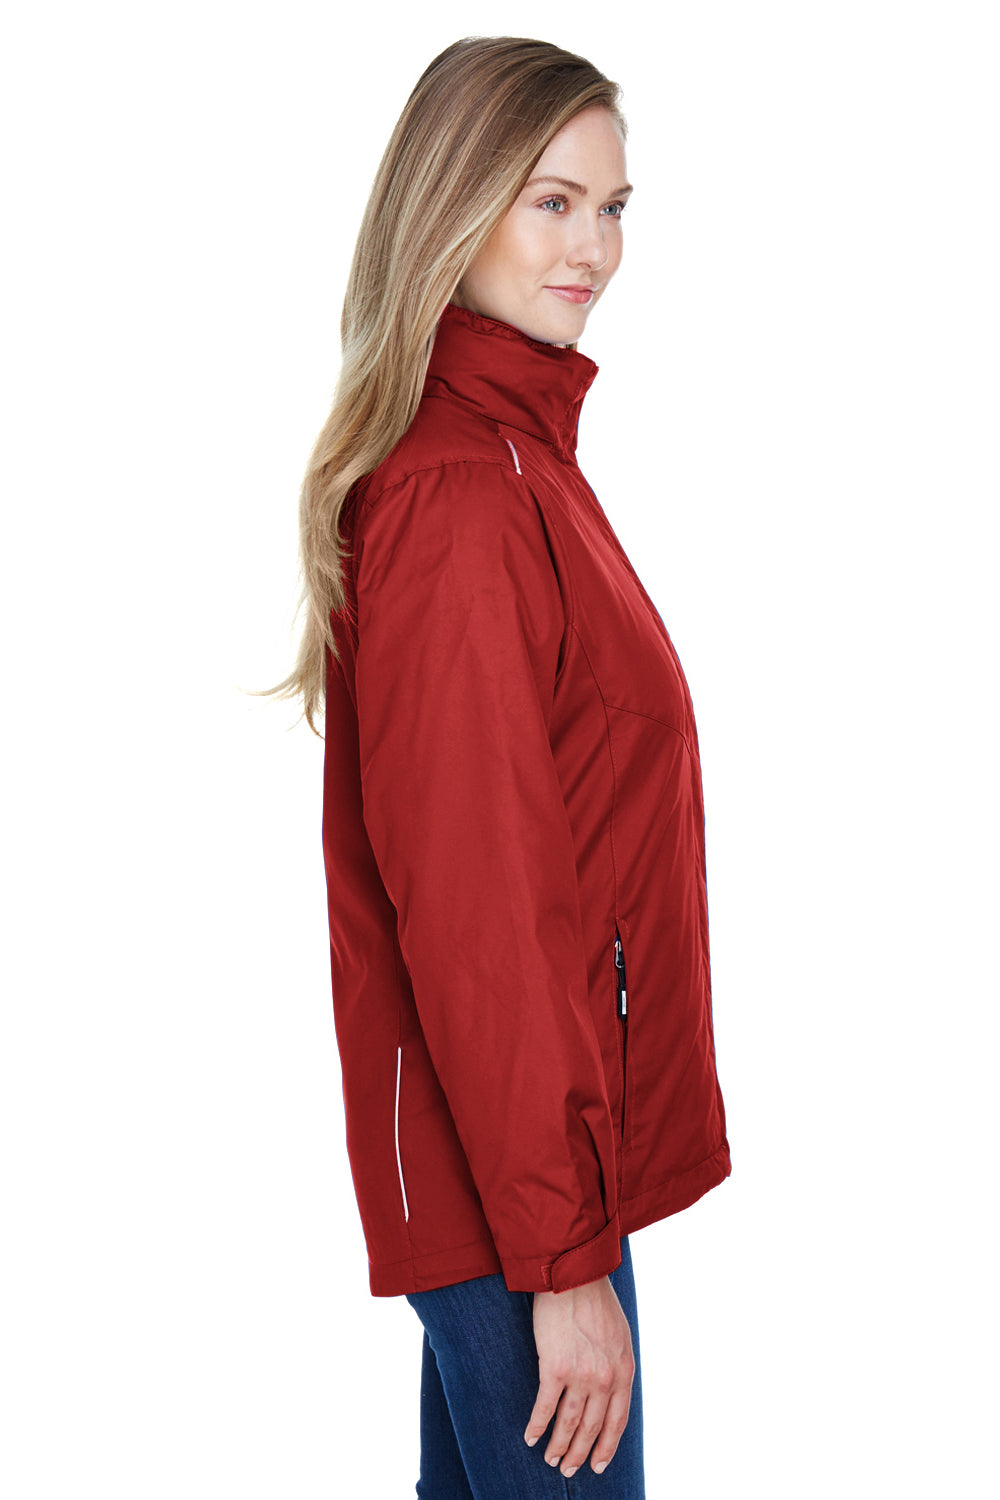 Core 365 78205 Womens Region 3-in-1 Water Resistant Full Zip Hooded Jacket Red Side